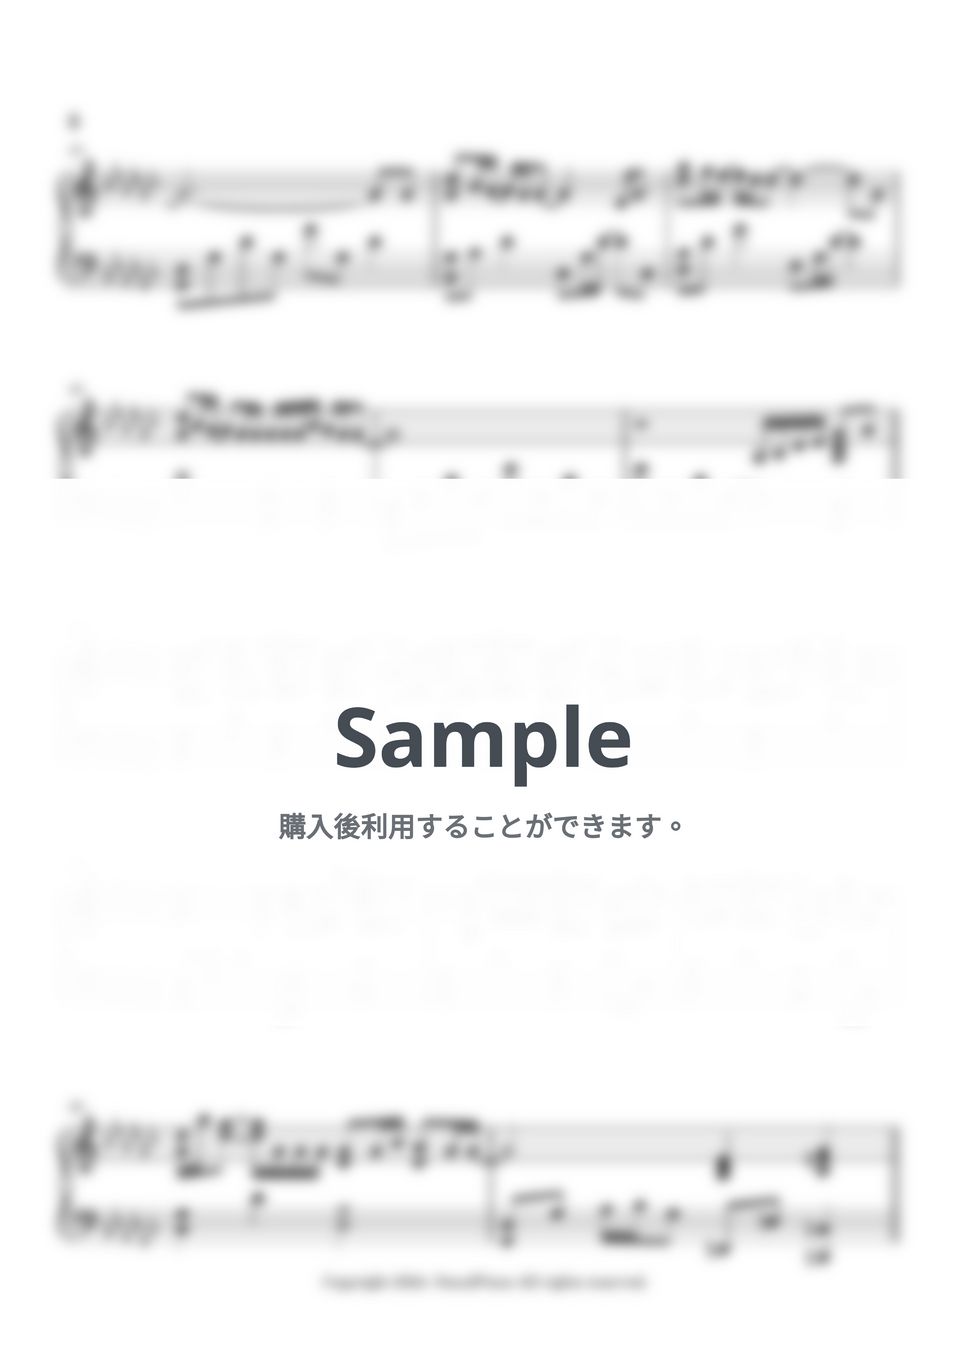 RADWIMPS - なんでもないや (movie edit)(Nandemonaiya) (君の名は OST track 26) by 今日ピアノ(Oneul Piano)